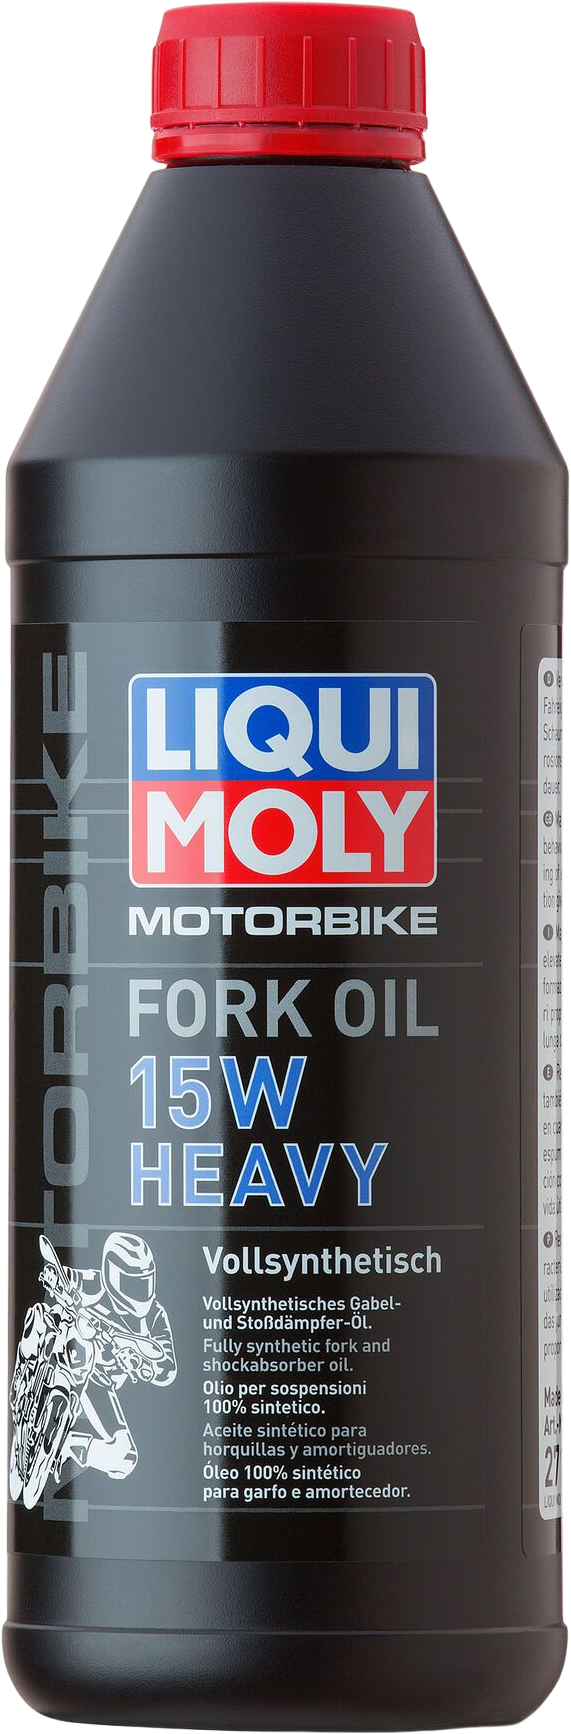 Liqui Moly Motorbike Fork Oil 15W heavy, 1 lt